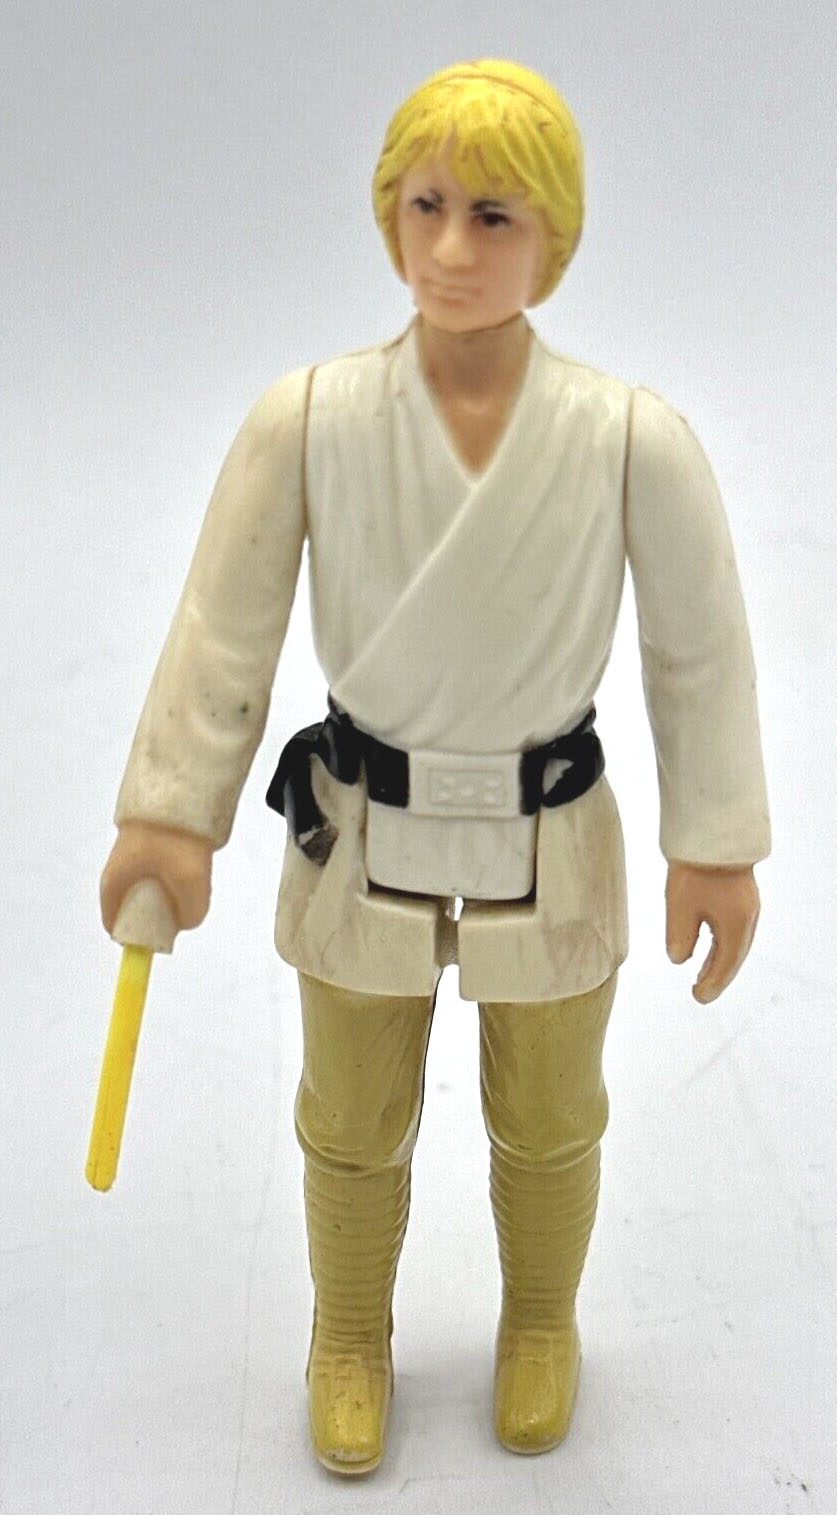 Star Wars Luke Skywalker (blond hair)(Episode 4) 3.75 Inch Action Figure - Used